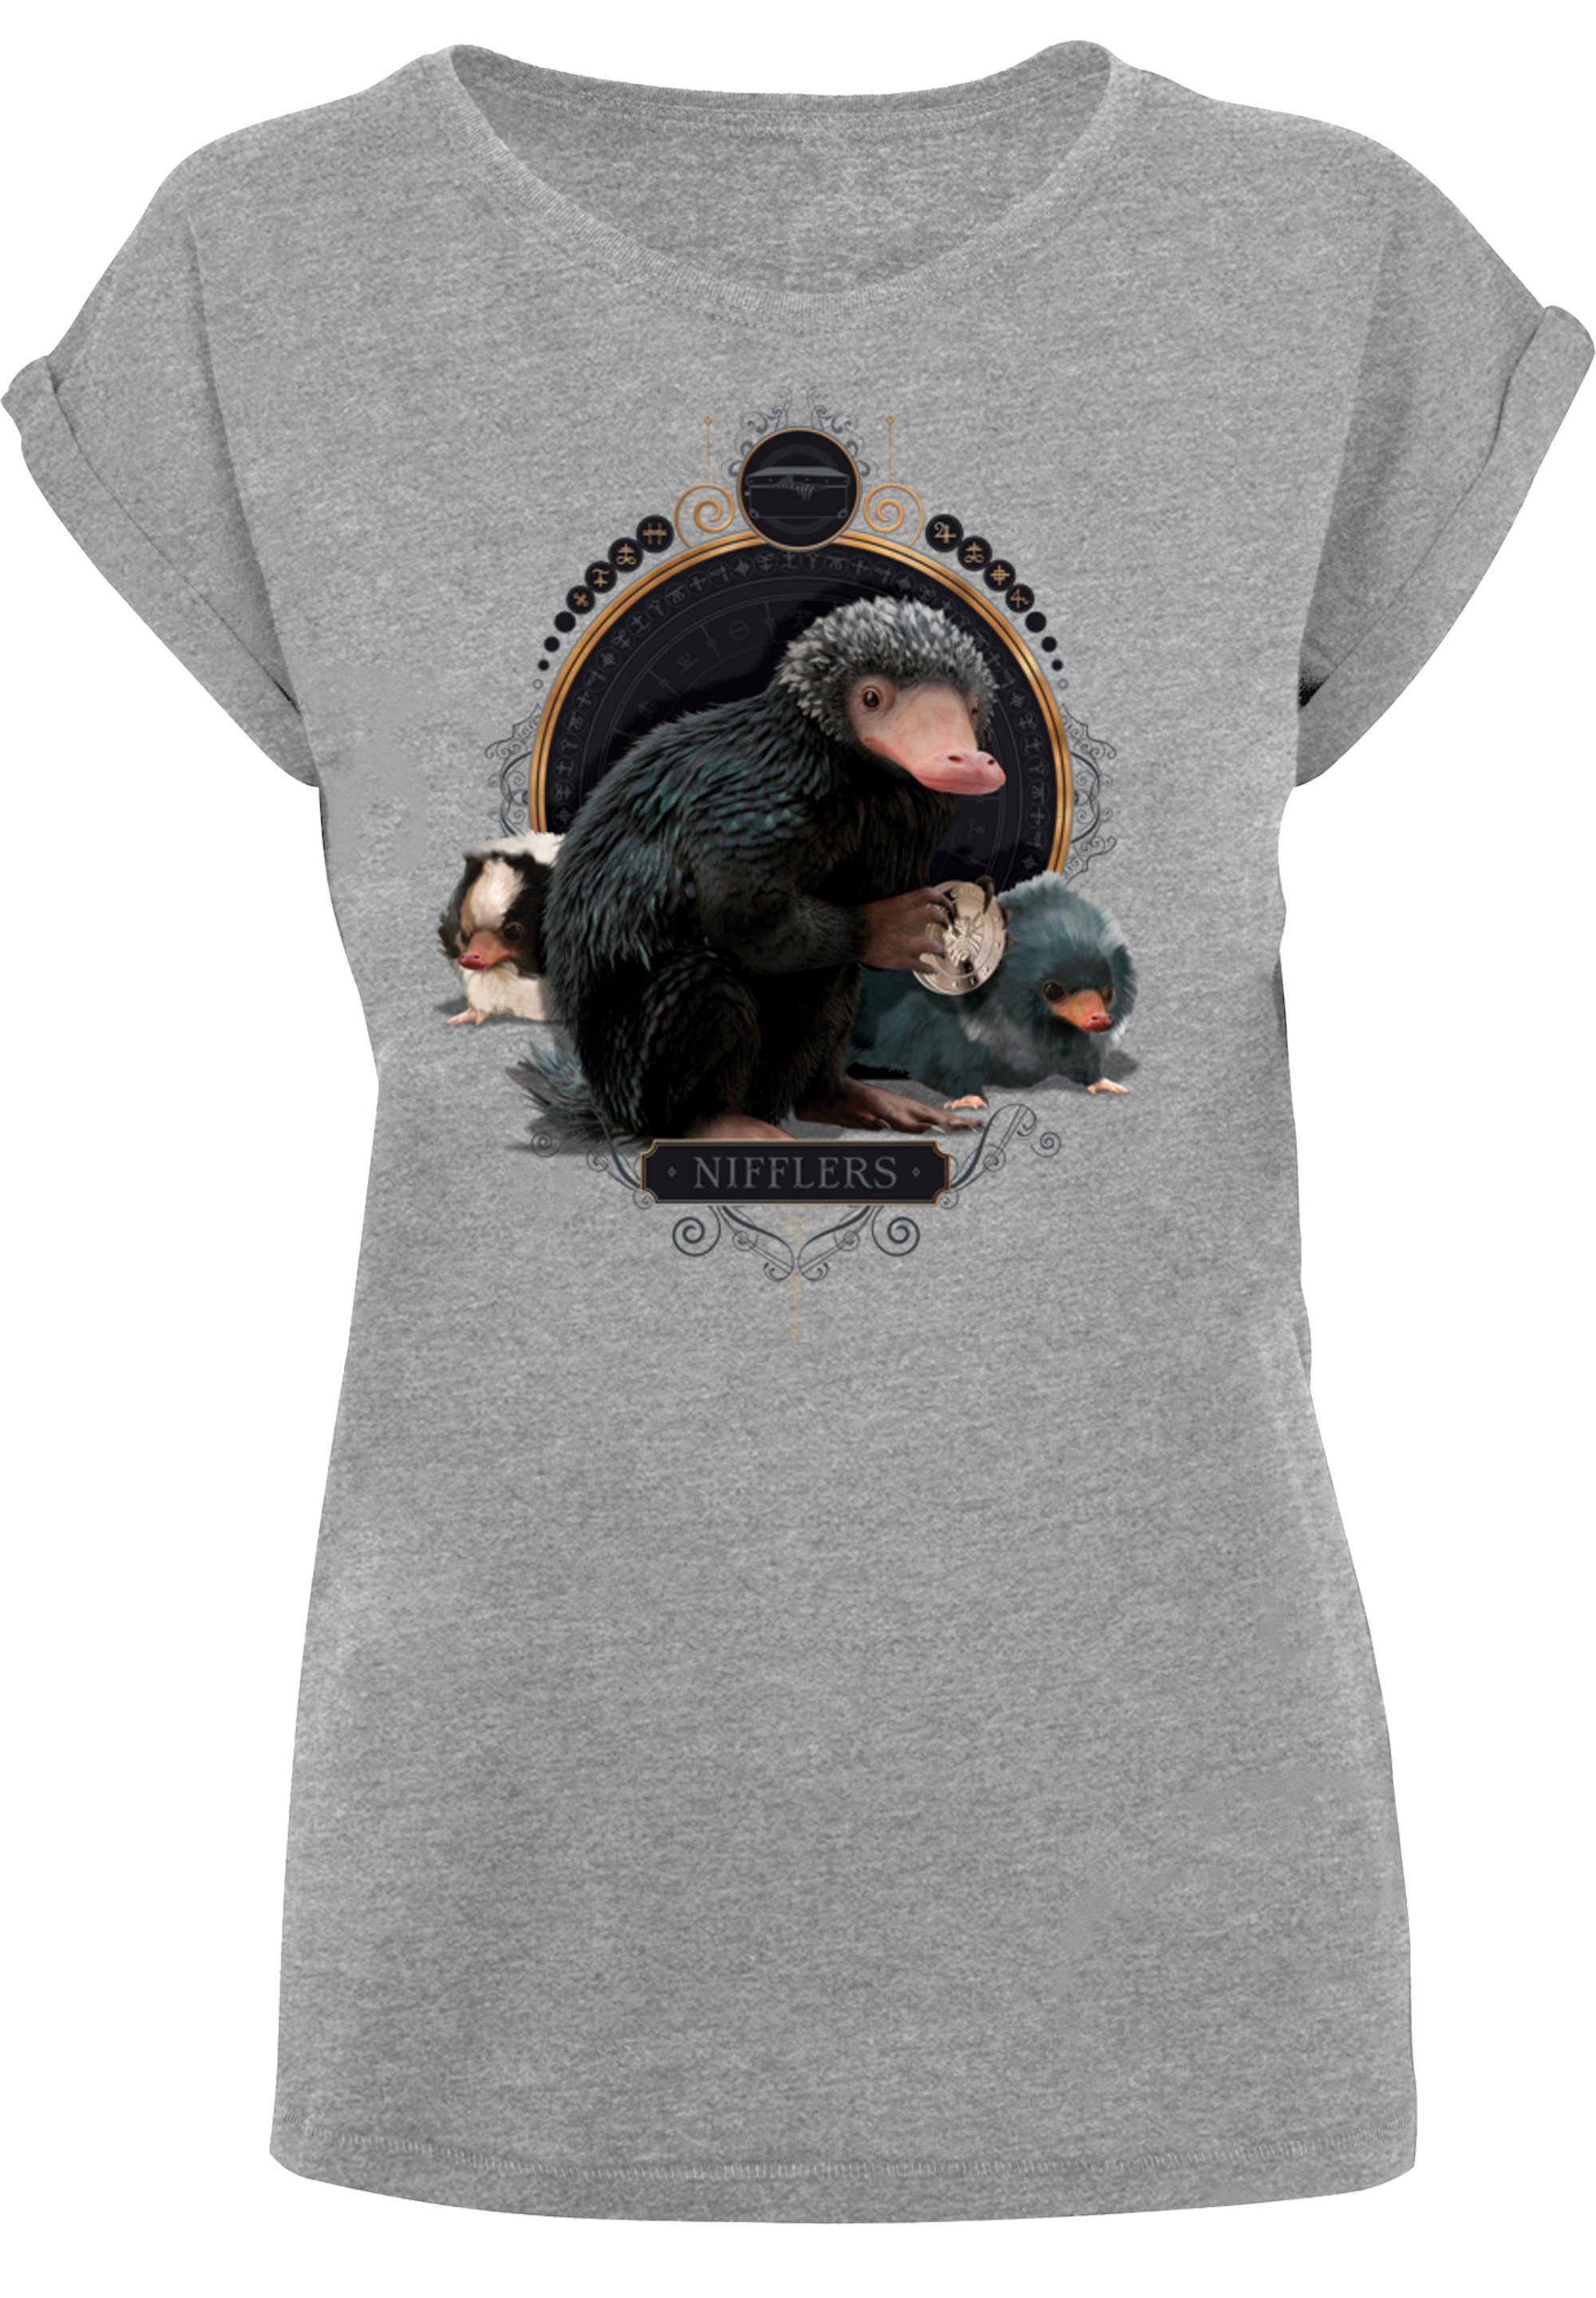 F4NT4STIC T-Shirt Phantastische Tierwesen Baby Nifflers Print